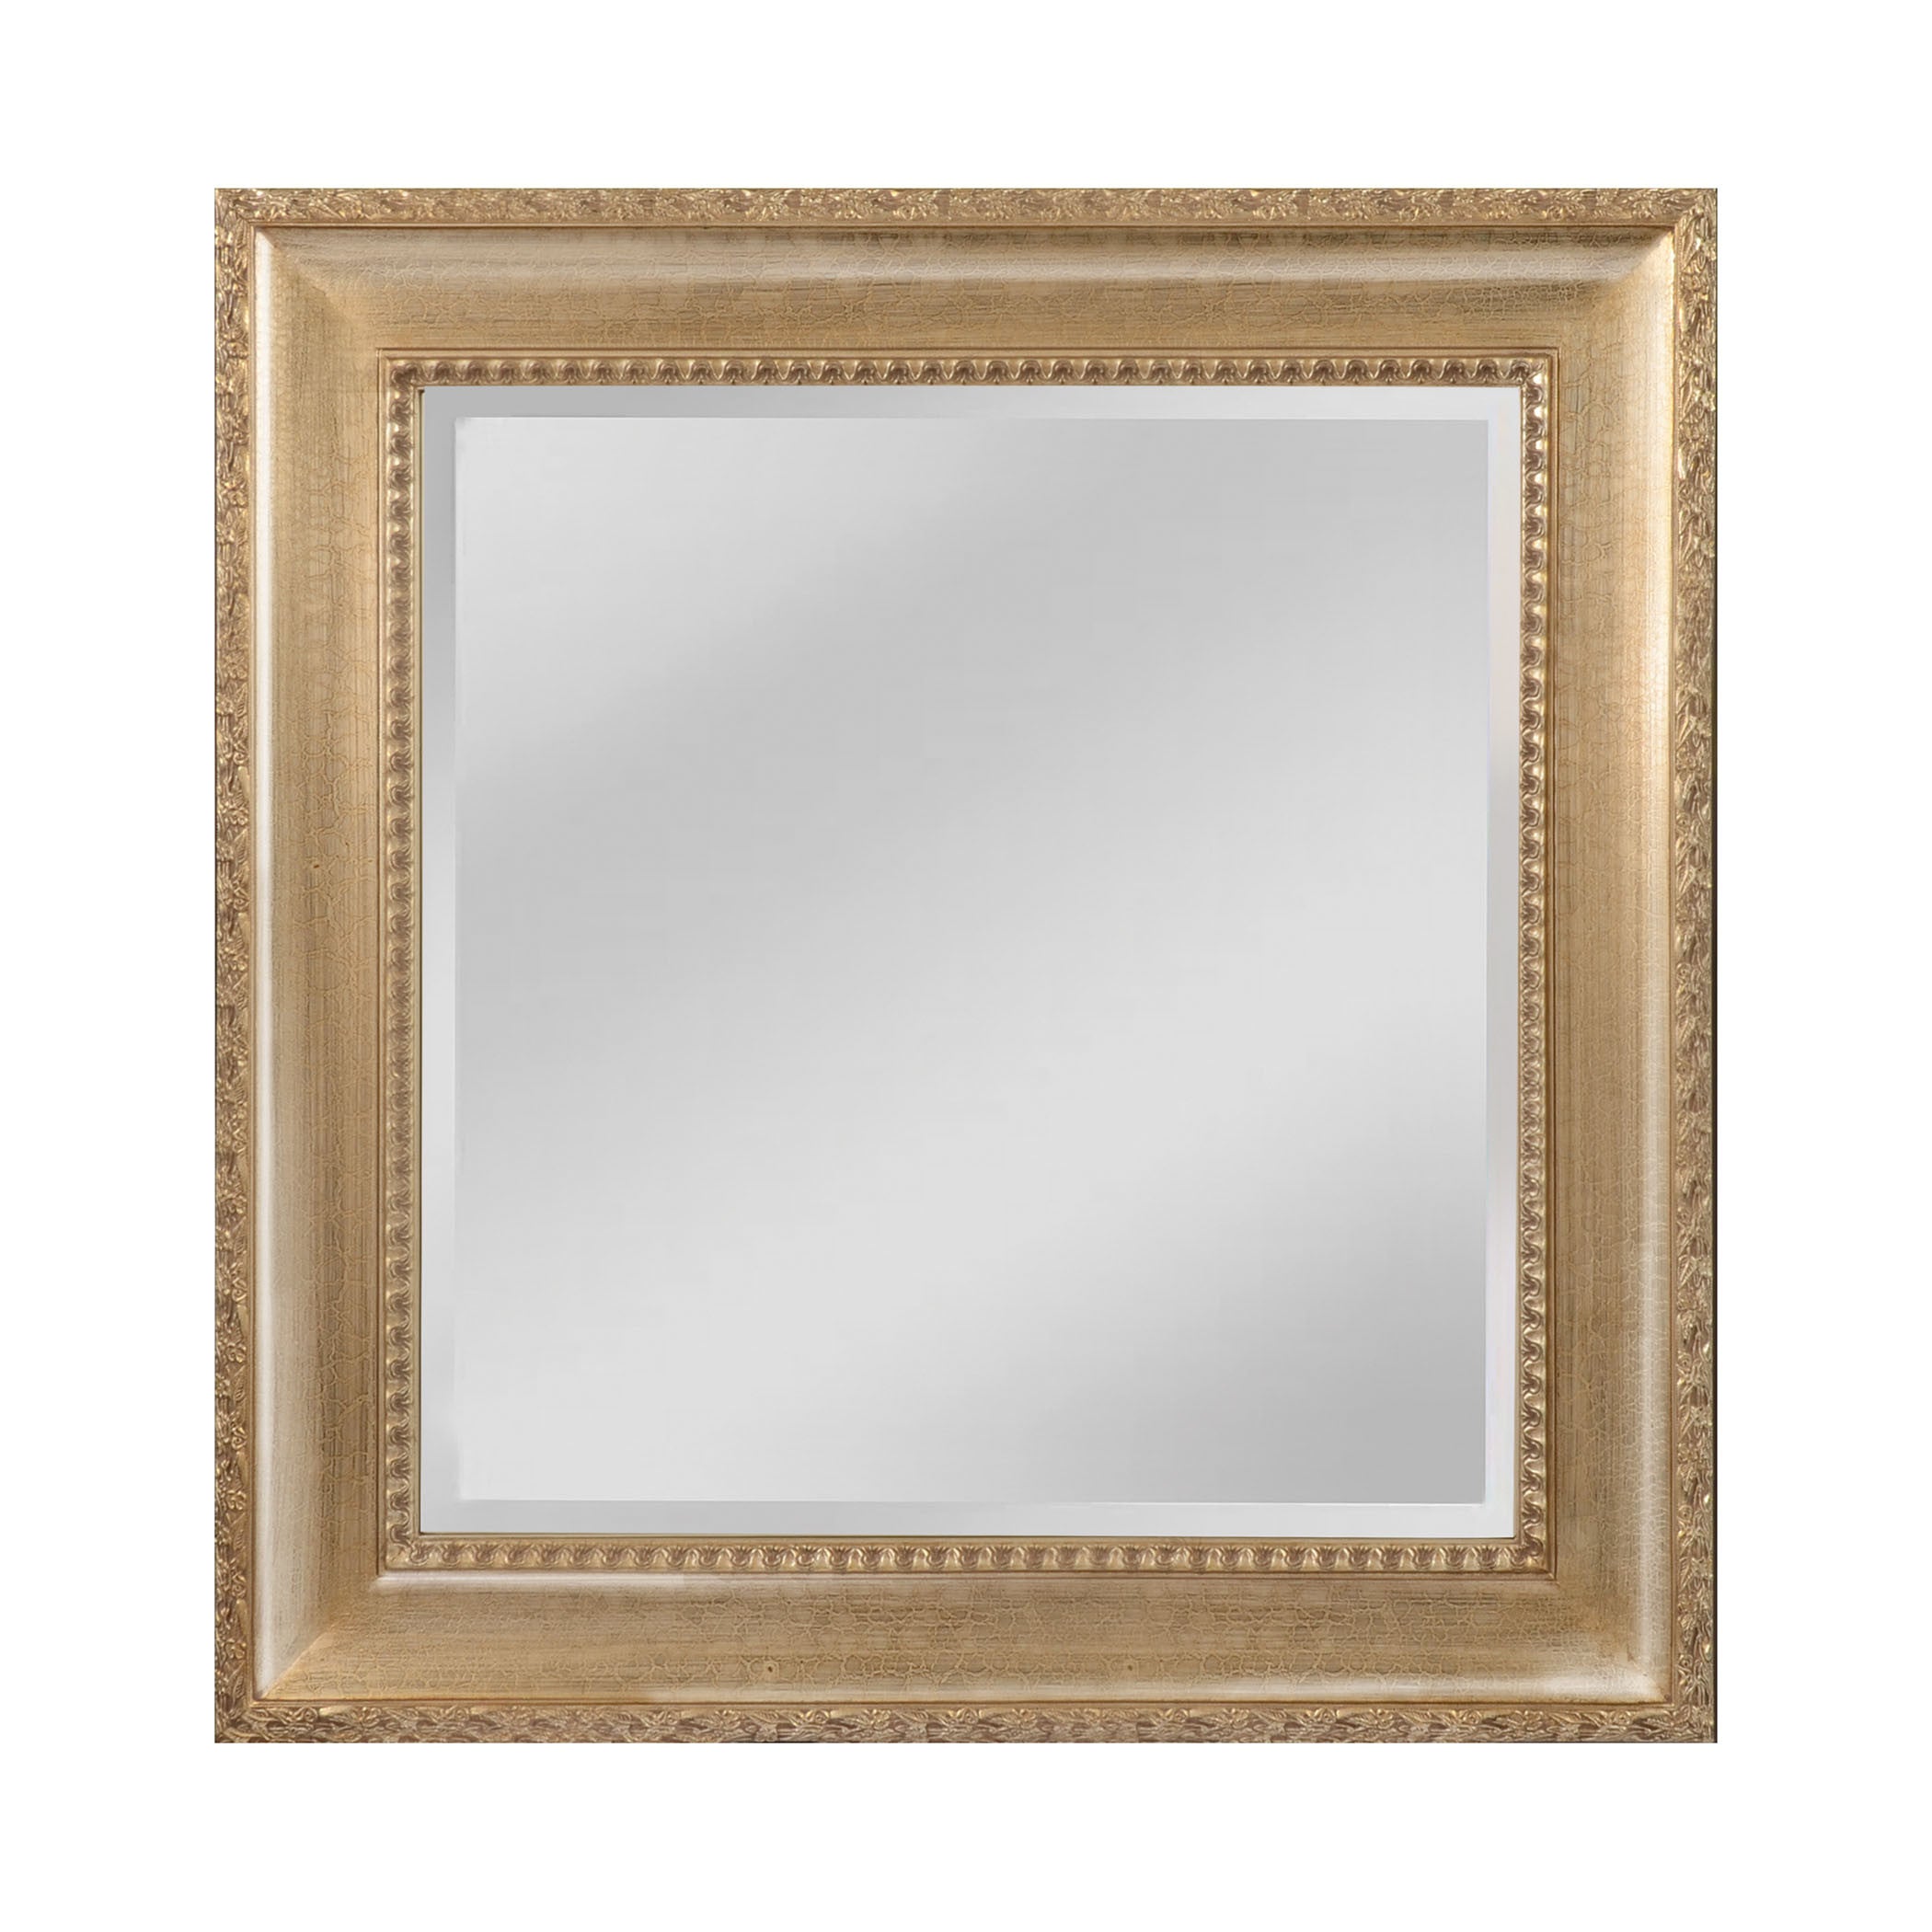 Mirror Masters Mw4508b-0027 Beacon Street Collection Light Walnut,silver Mist Finish Wall Mirror